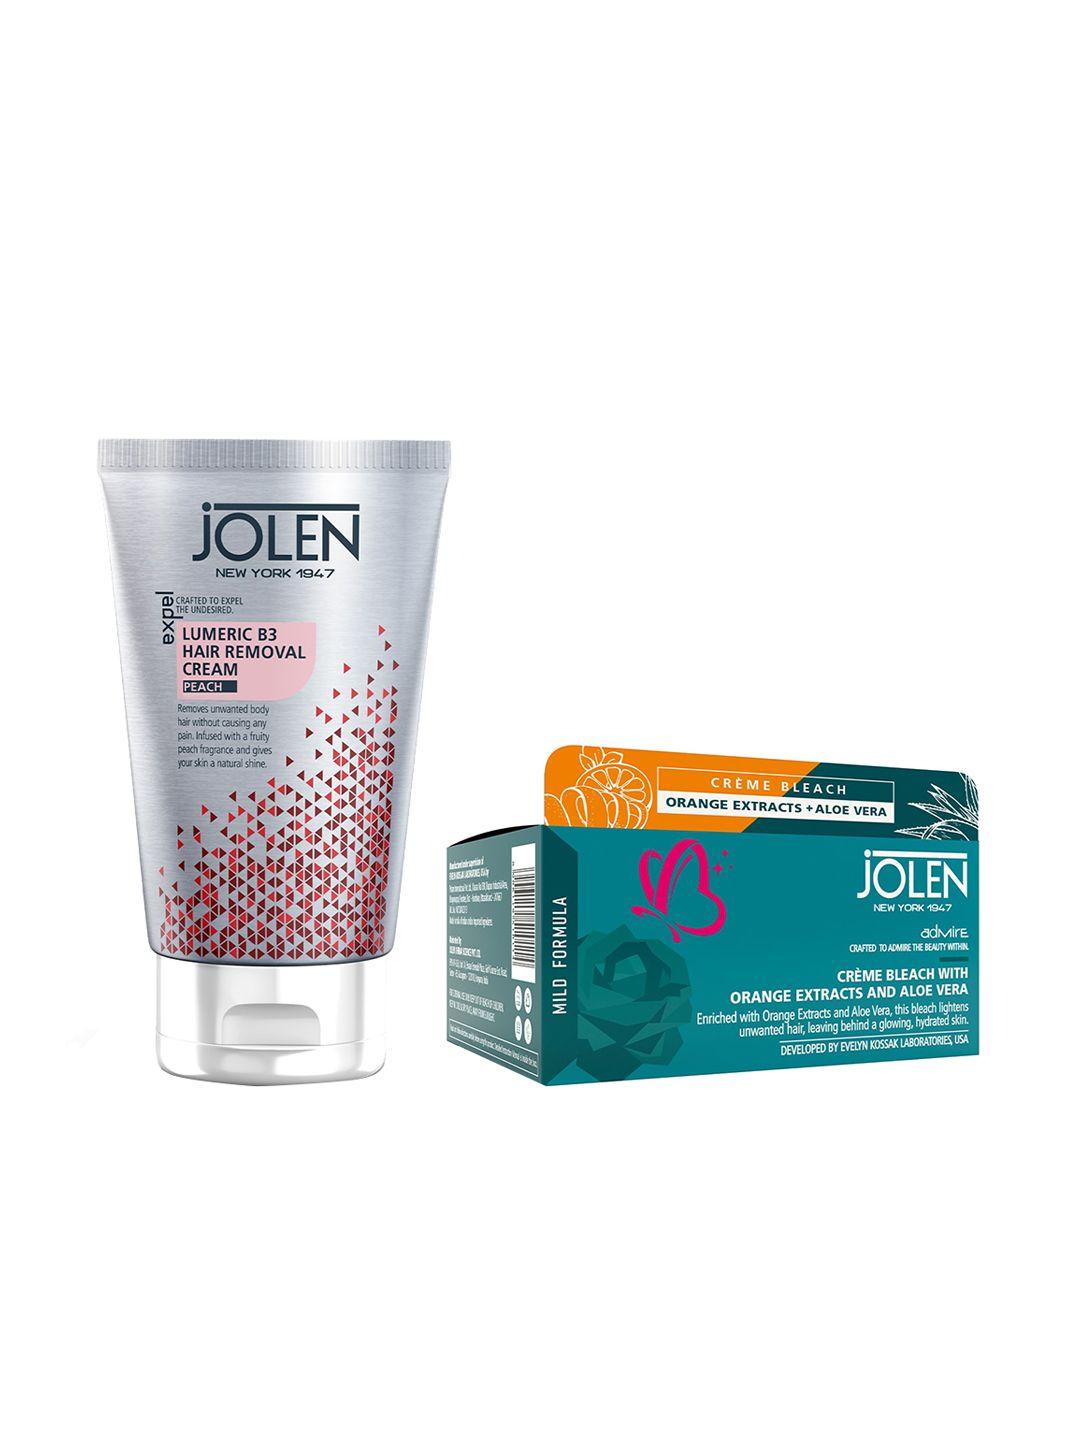 jolen new york 2 lumeric b3 hair removal cream-50g & creme bleach with orange-40g